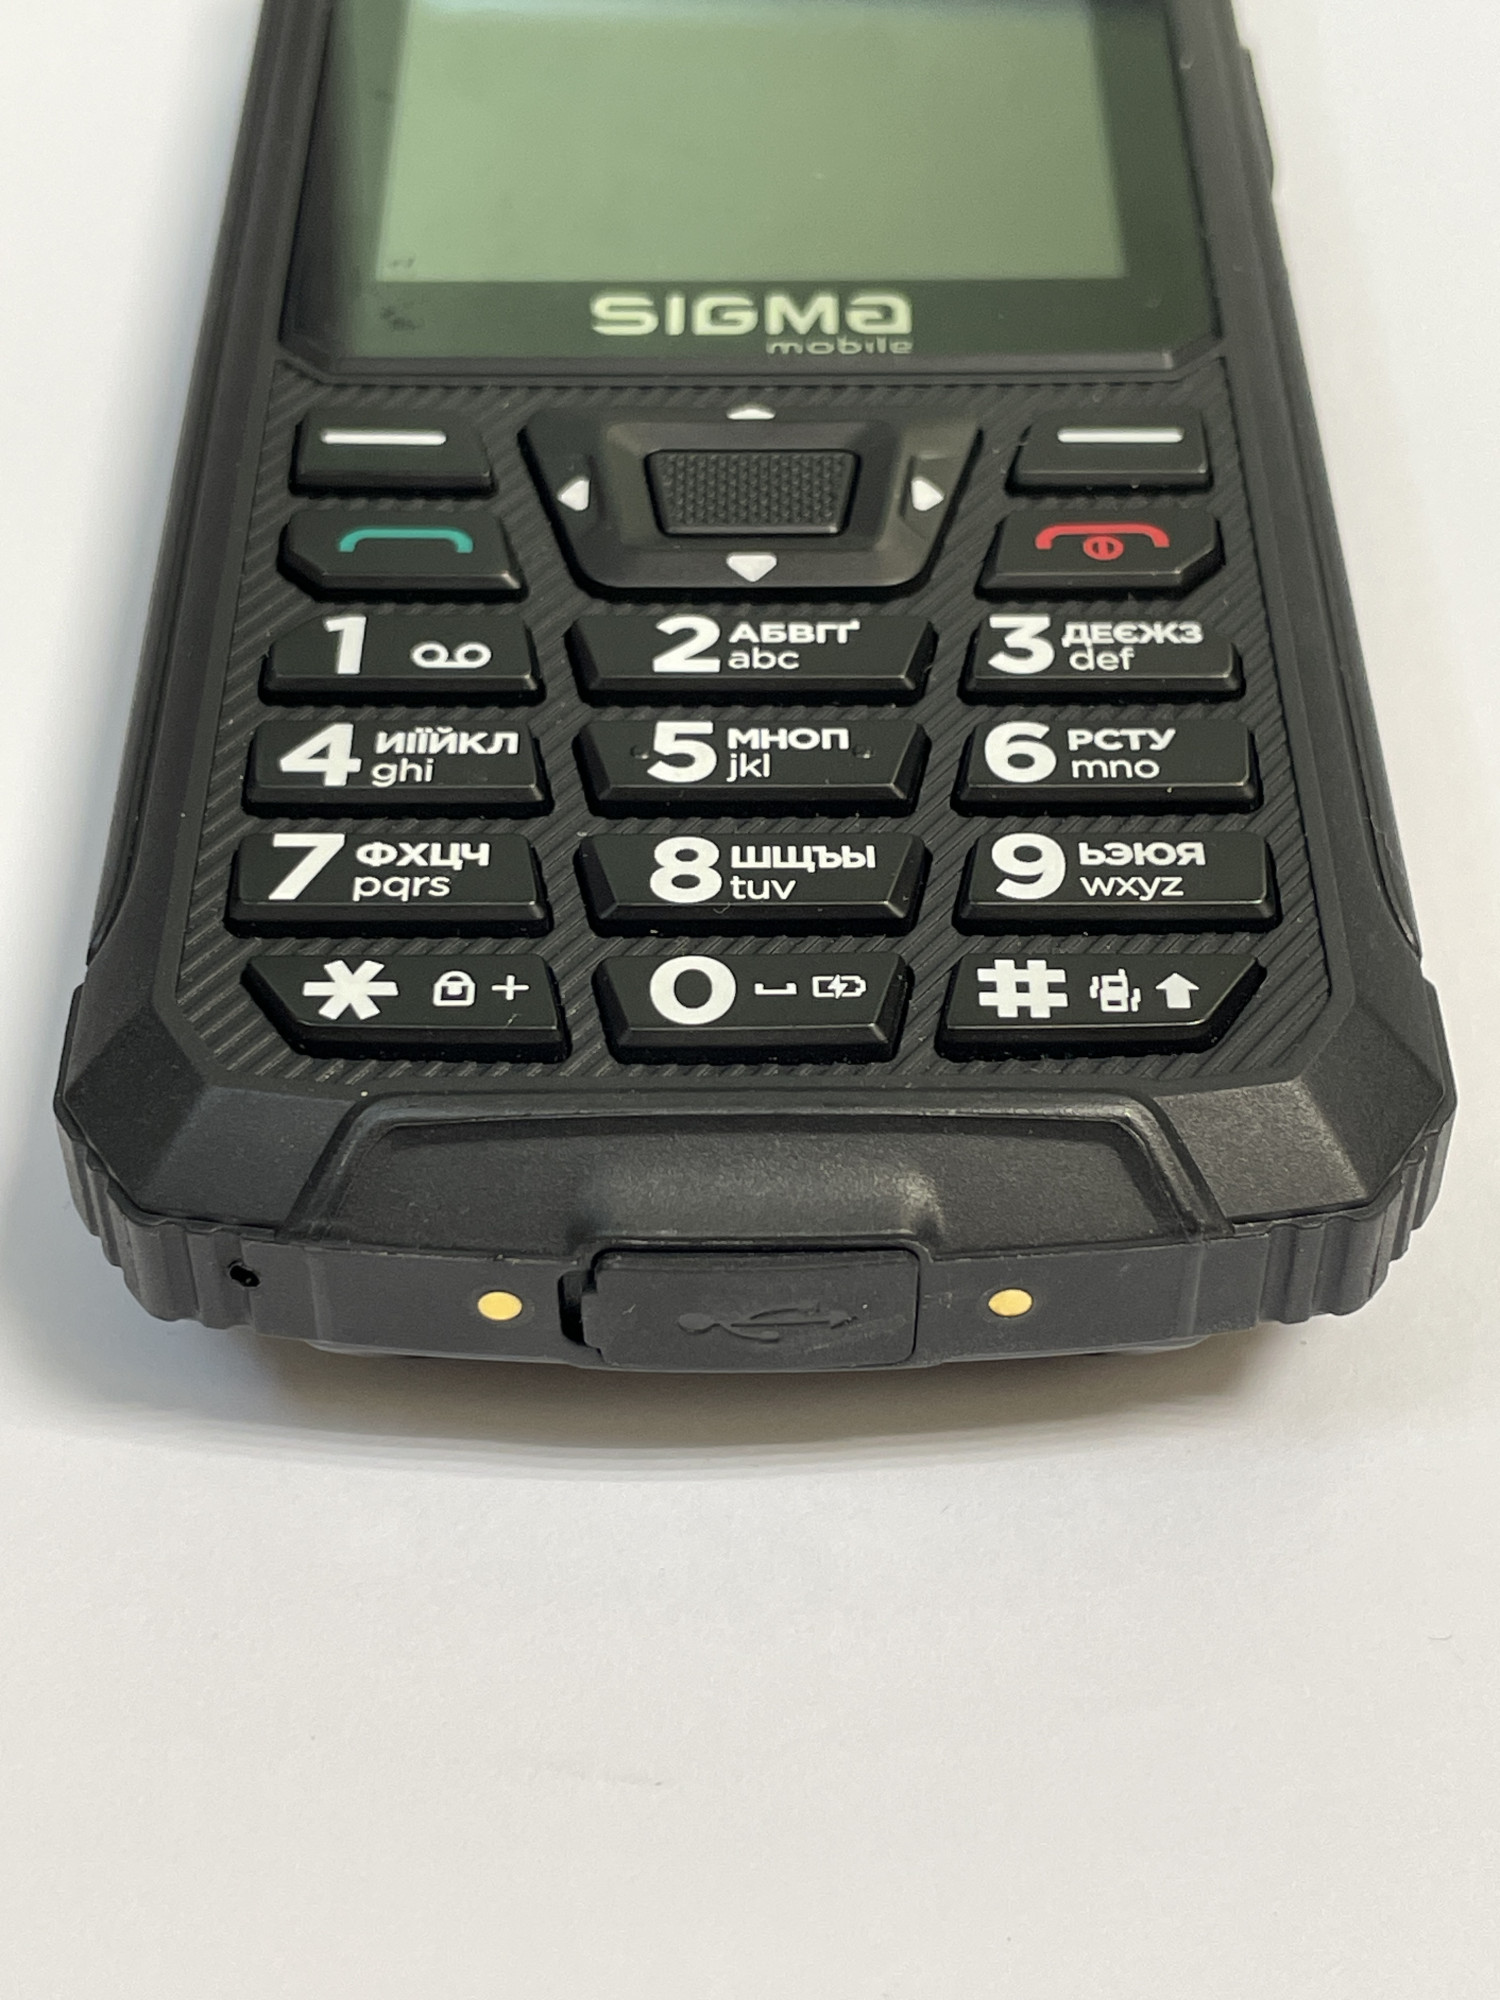 Sigma mobile X-treme PR68 3